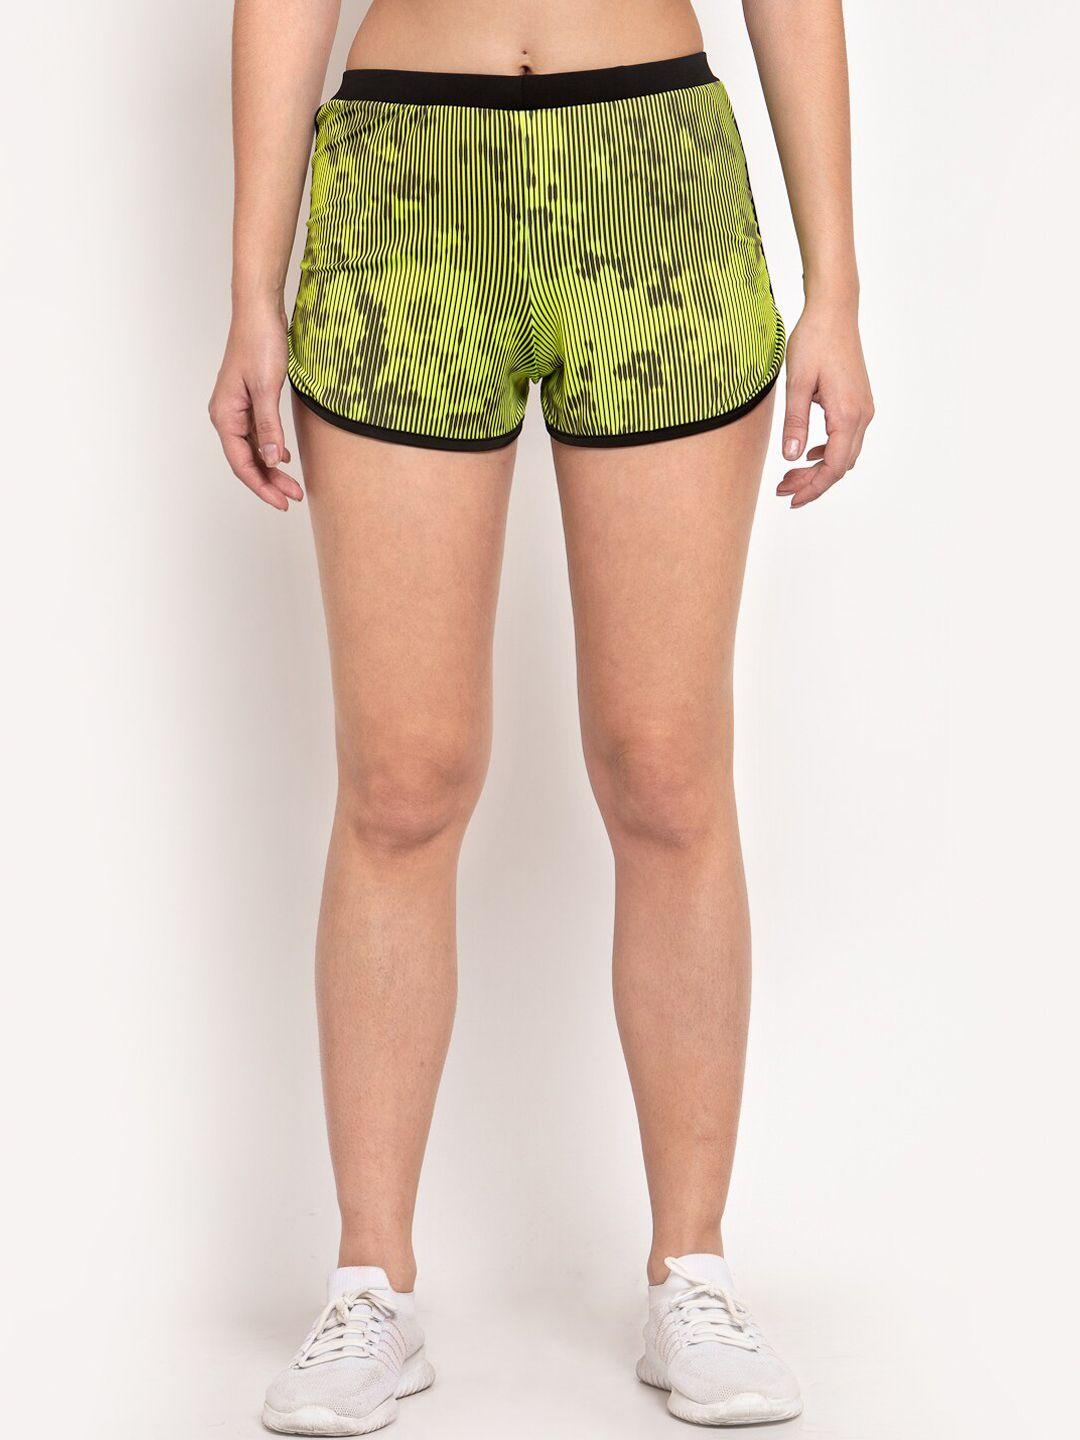 cukoo-women-green-&-black-printed-slim-fit-sports-shorts